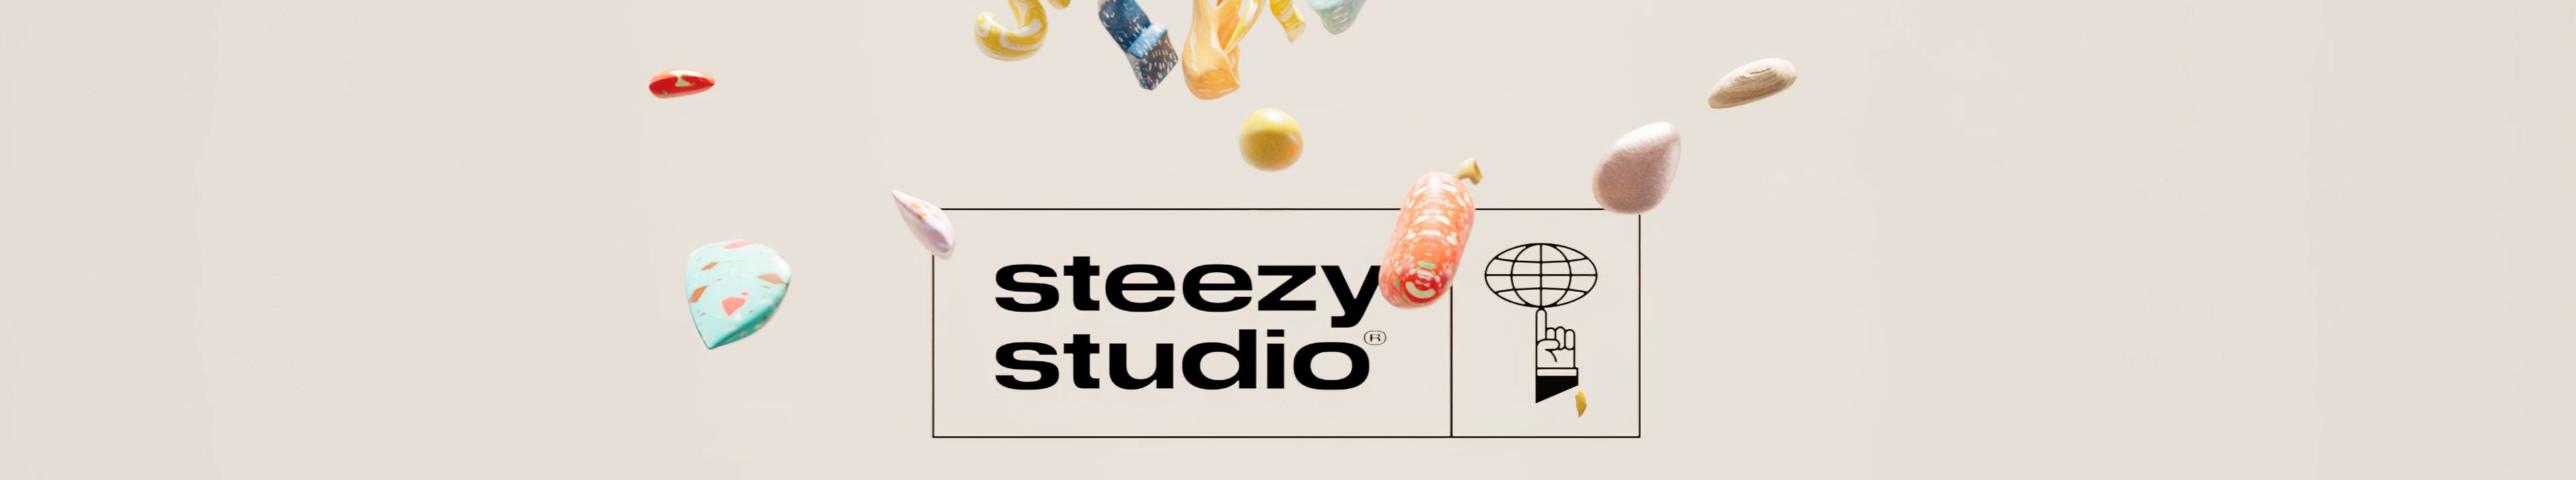 Banner profilu uživatele steezy studio